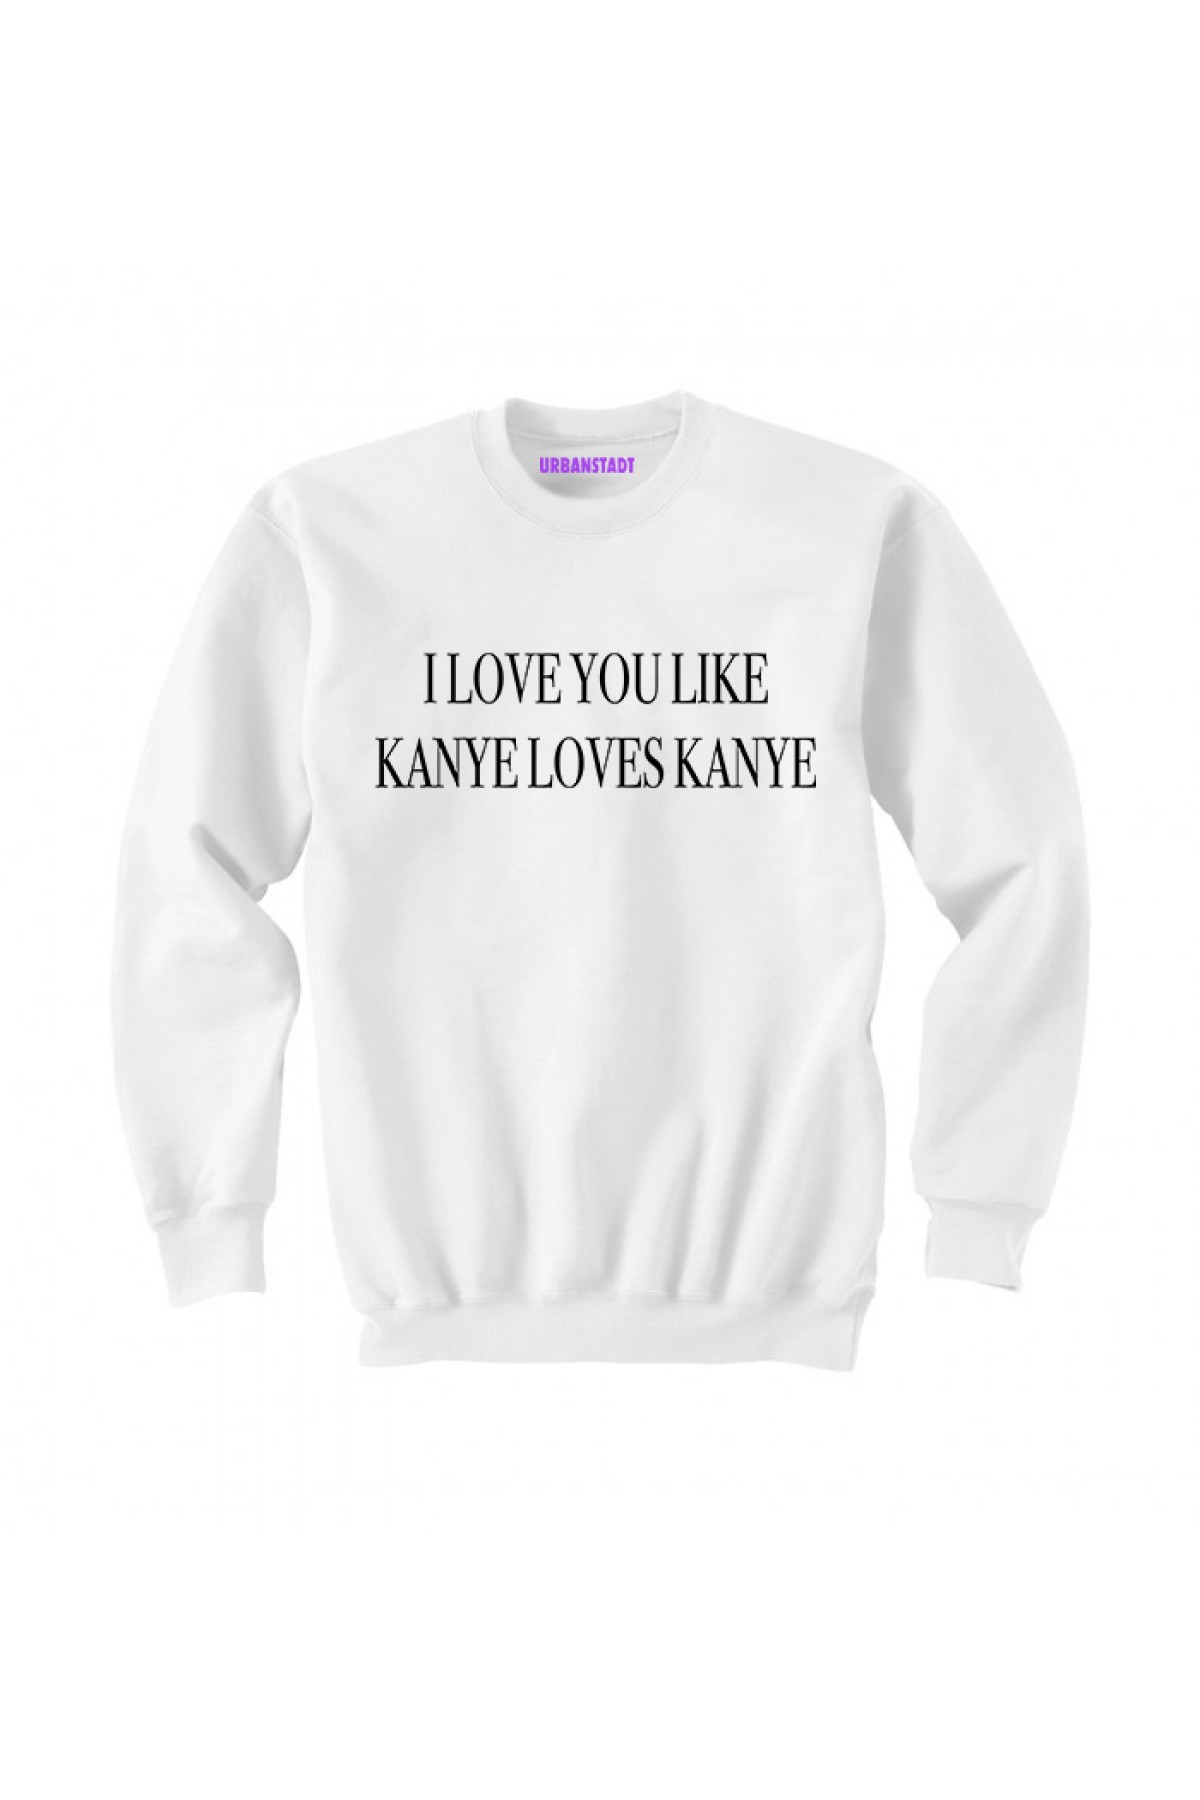 Kanye Loves Kanye Sweatshirt